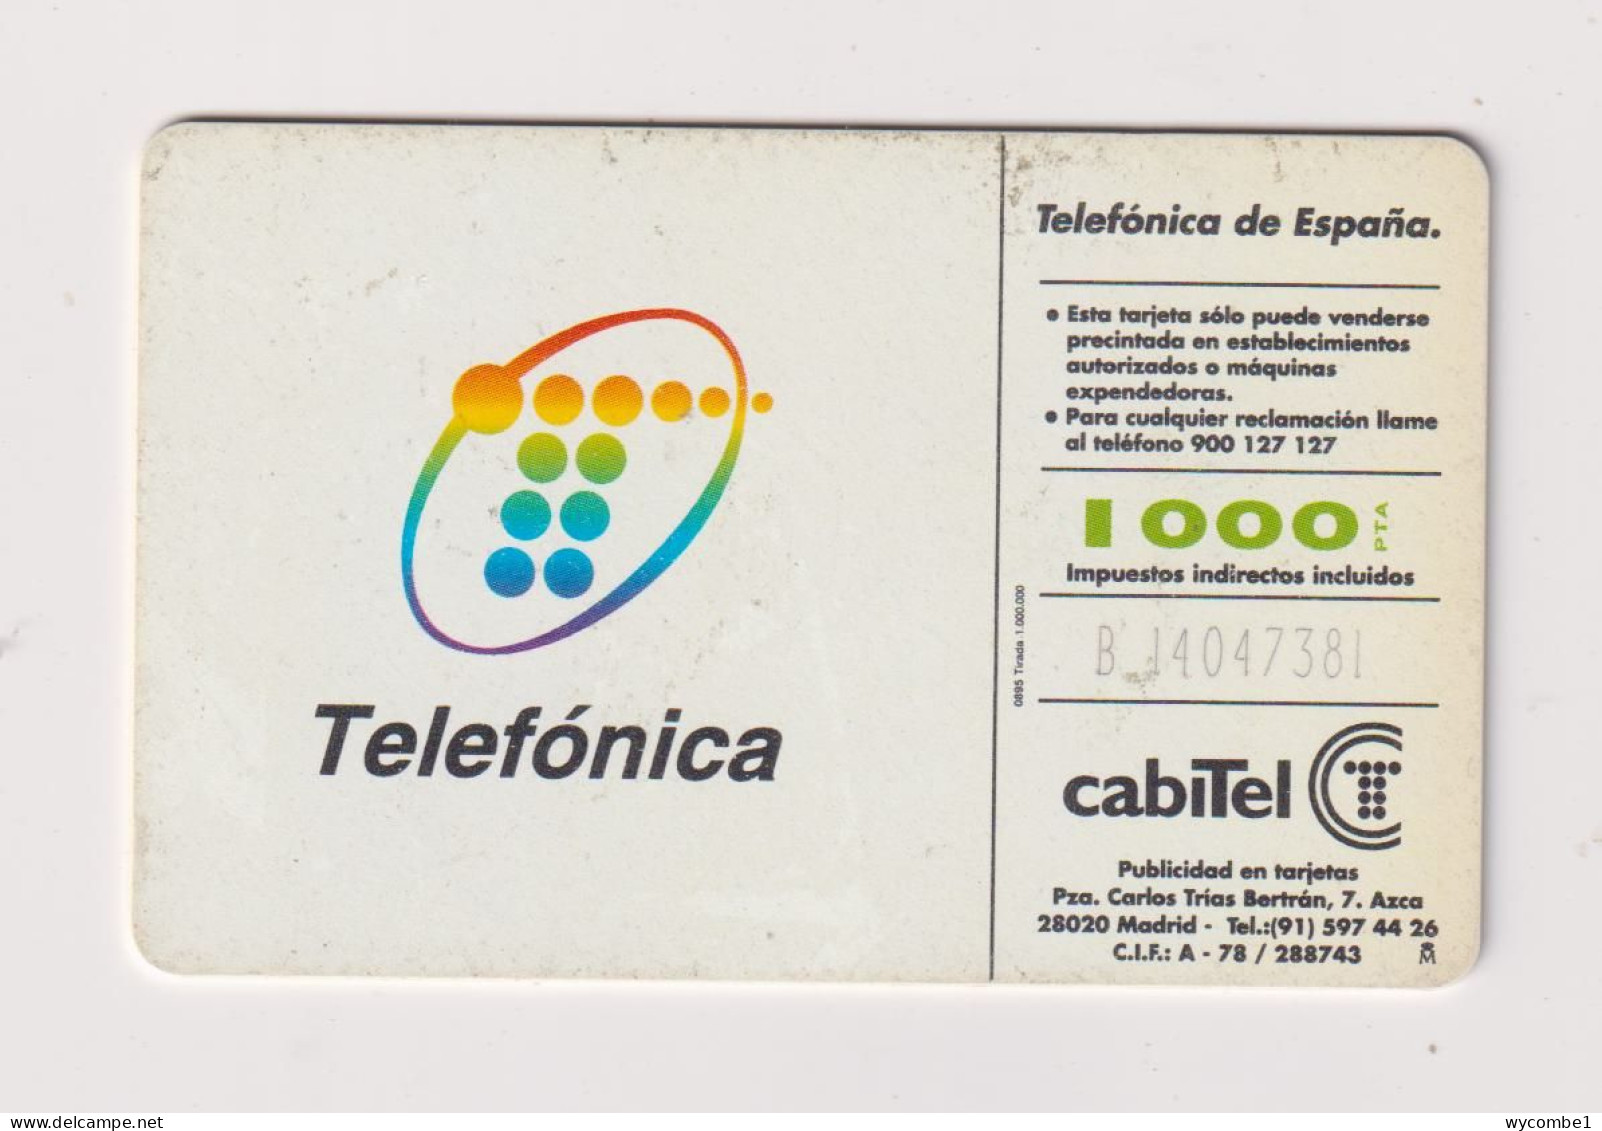 SPAIN - European Presidency Chip Phonecard - Commemorative Advertisment